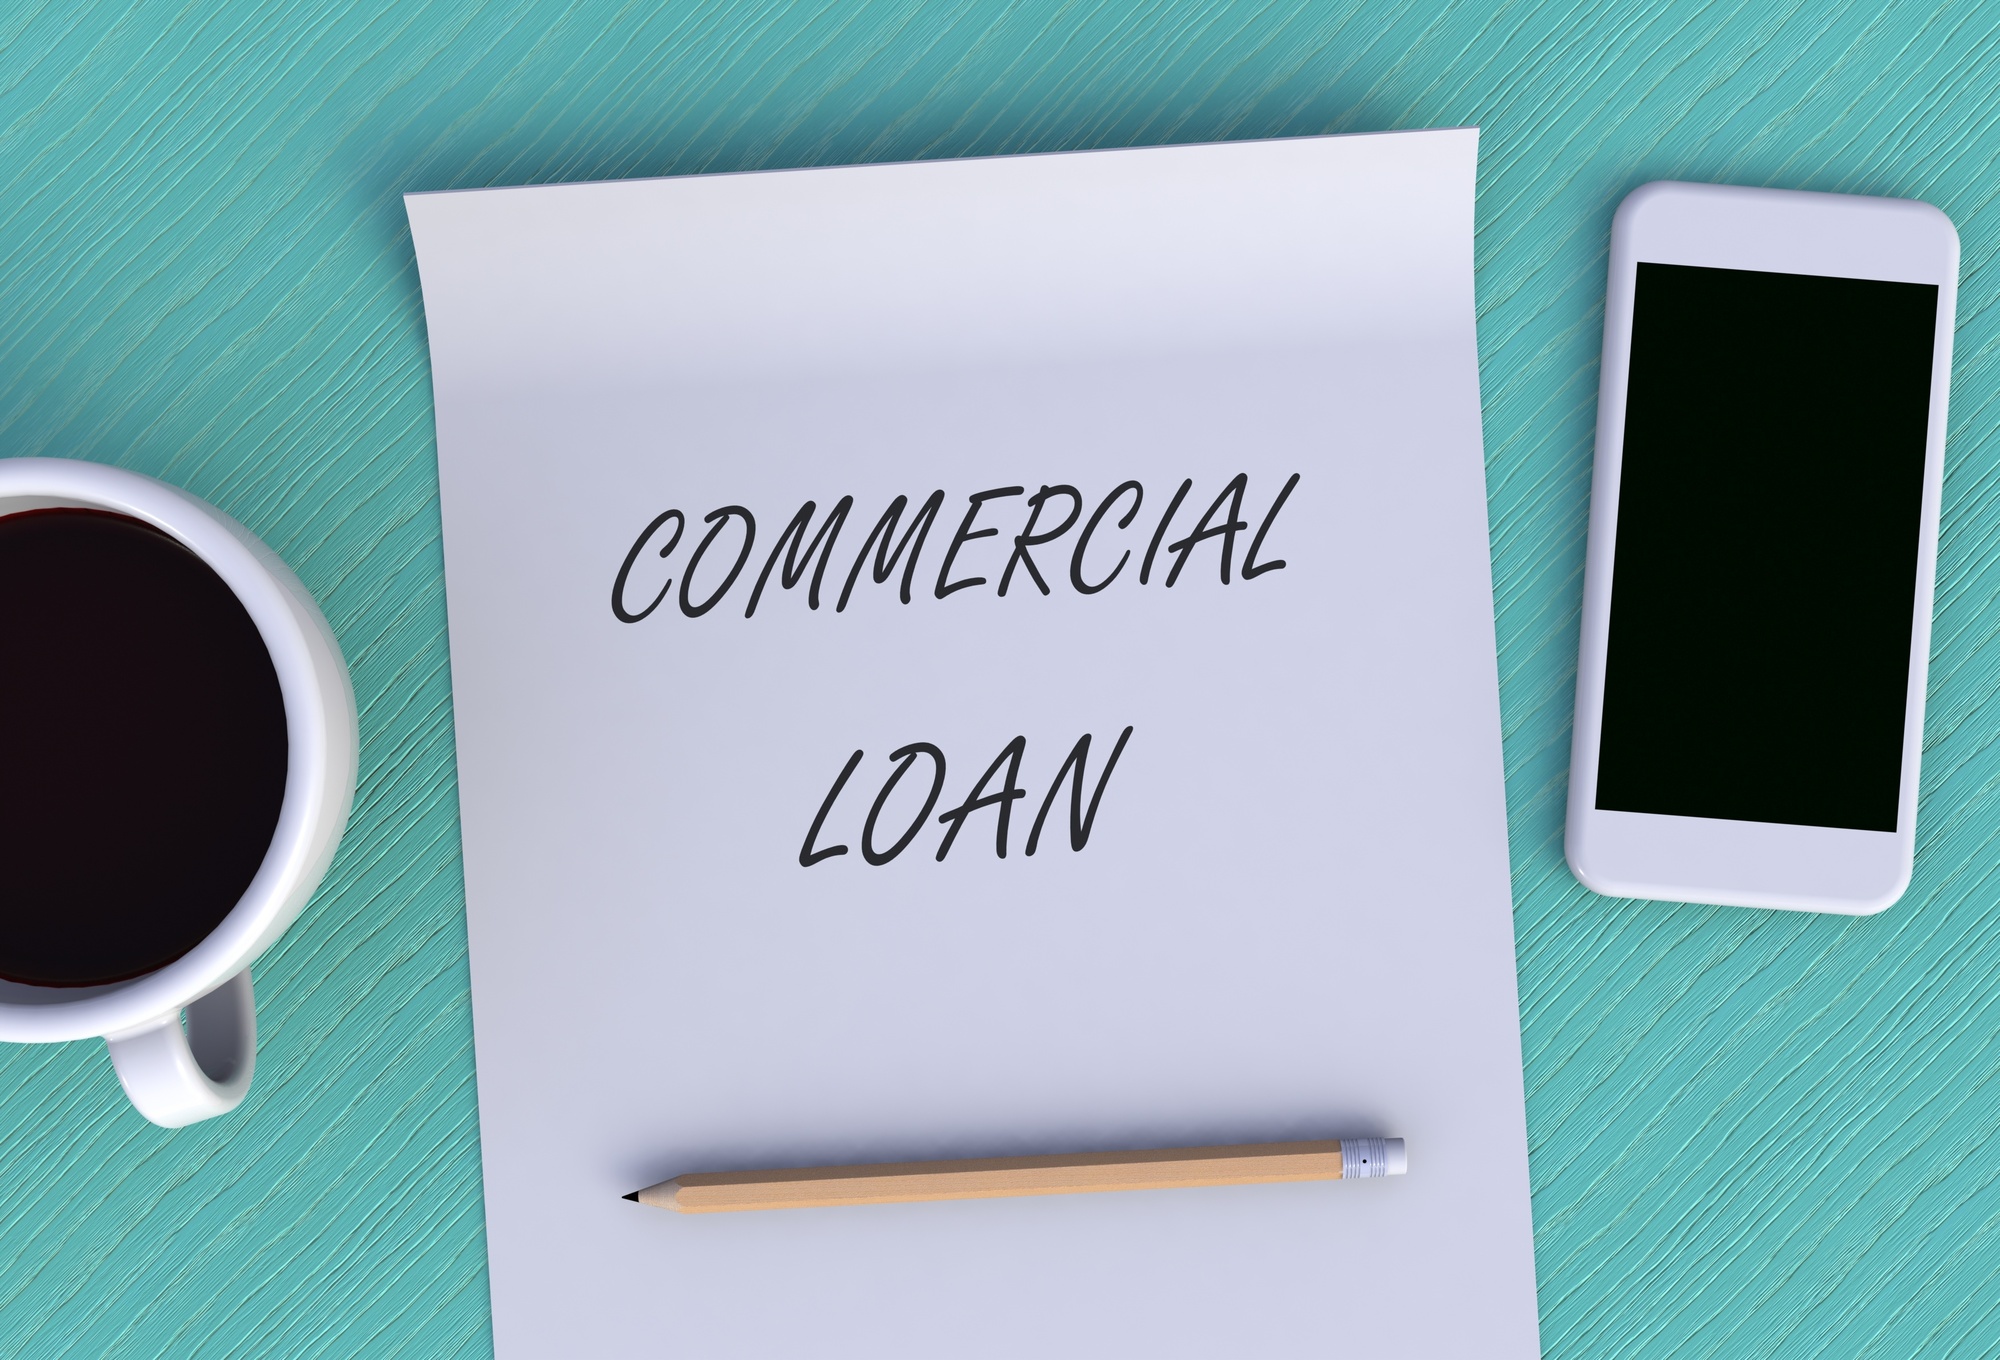 commercial loan paper